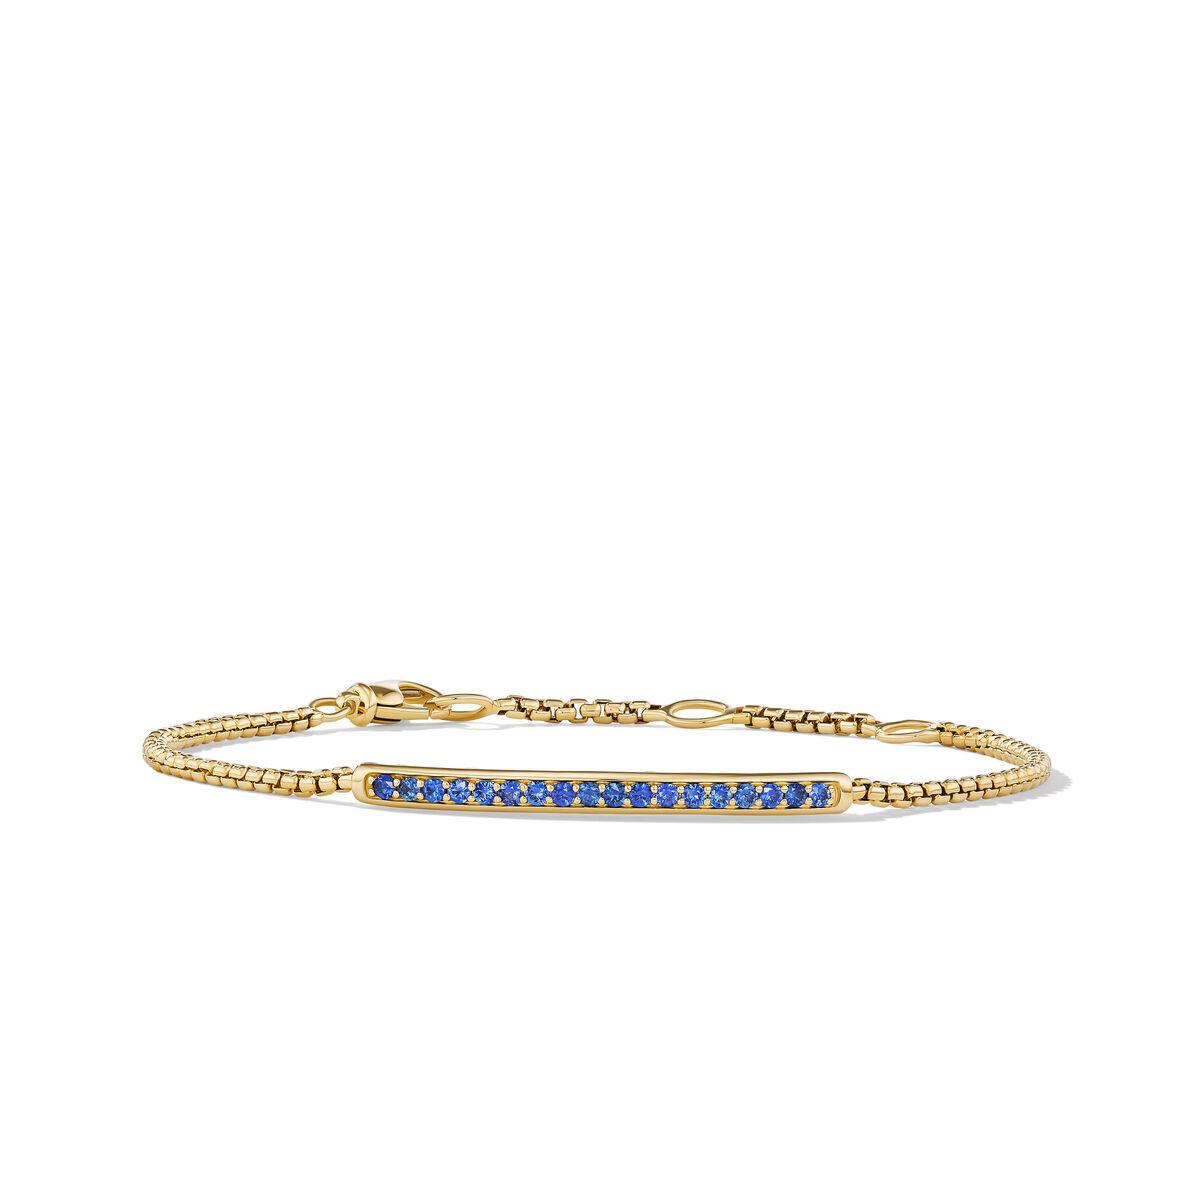 David Yurman Petite Pavé Bar Bracelet in 18K Yellow Gold with Blue Sapphires